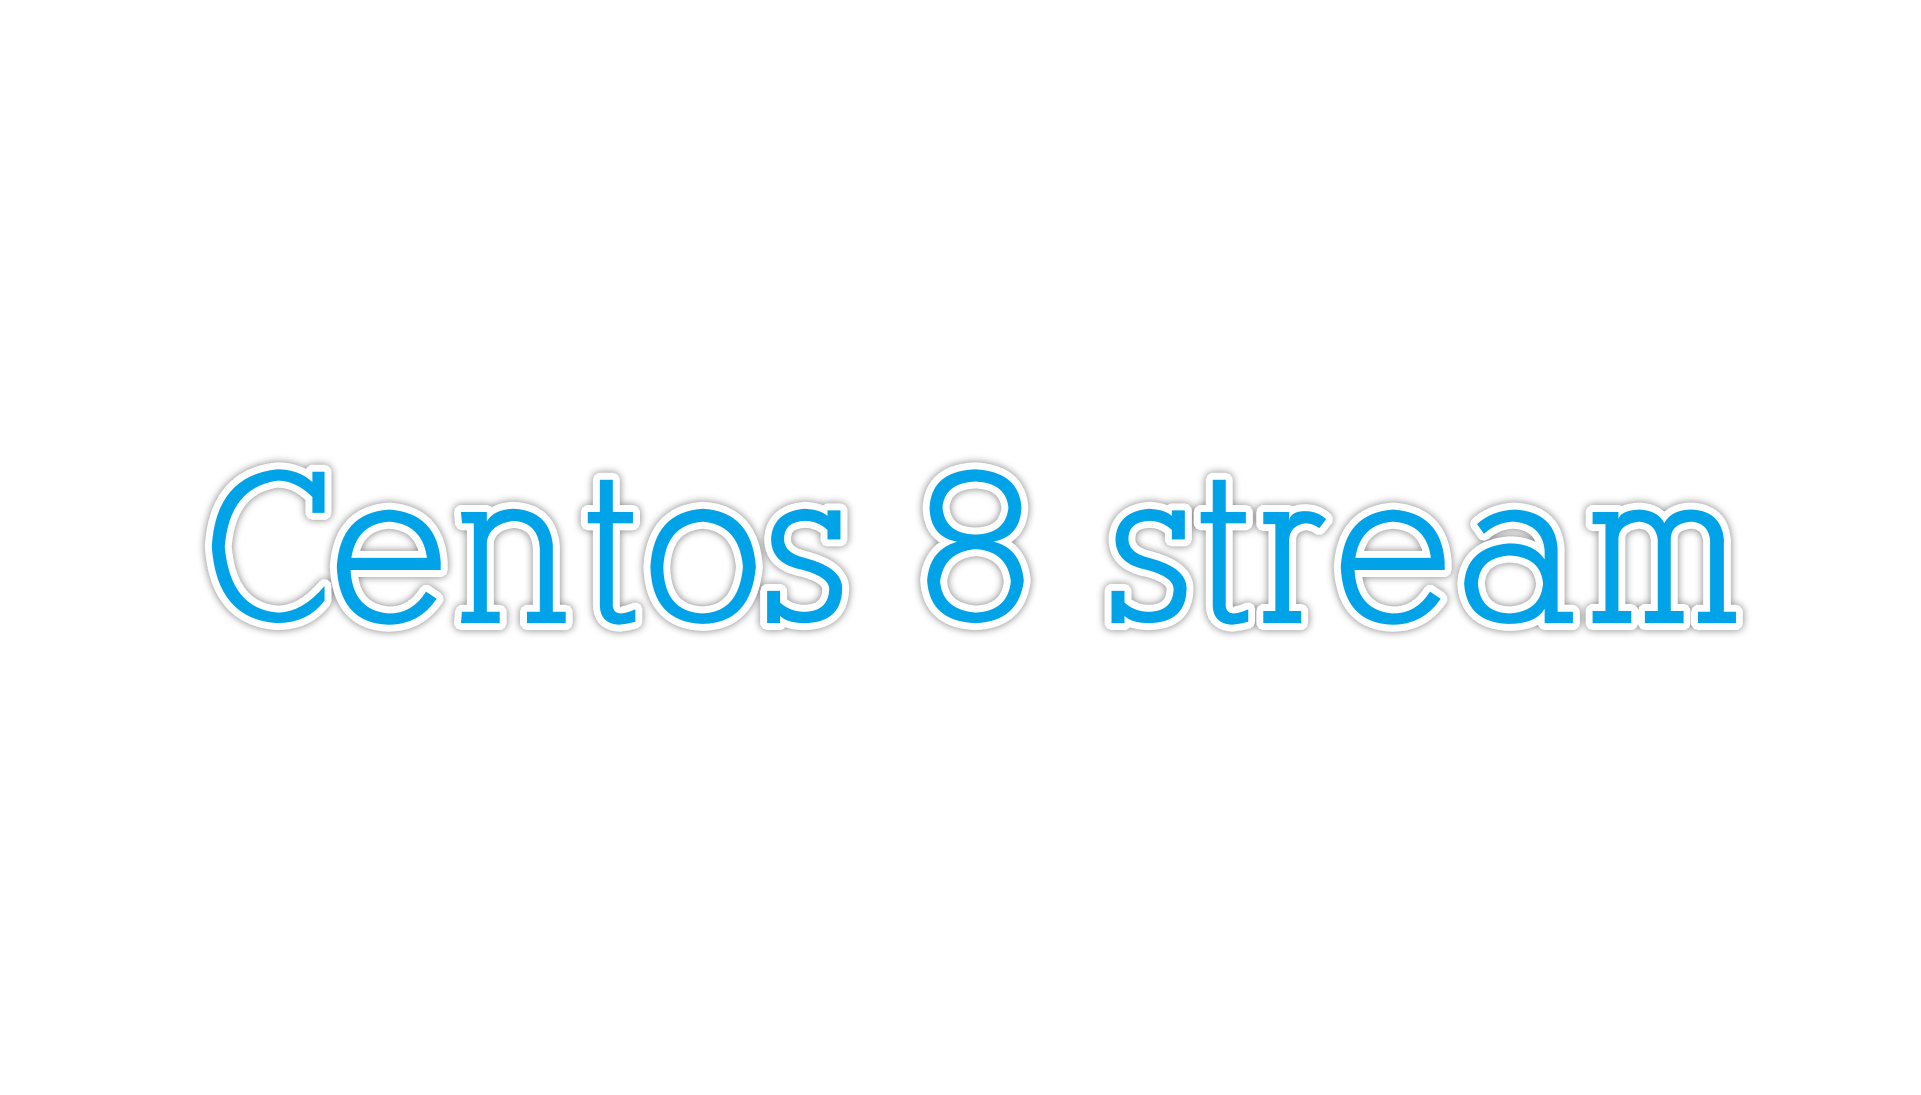 Centos 8 stream 初始配置